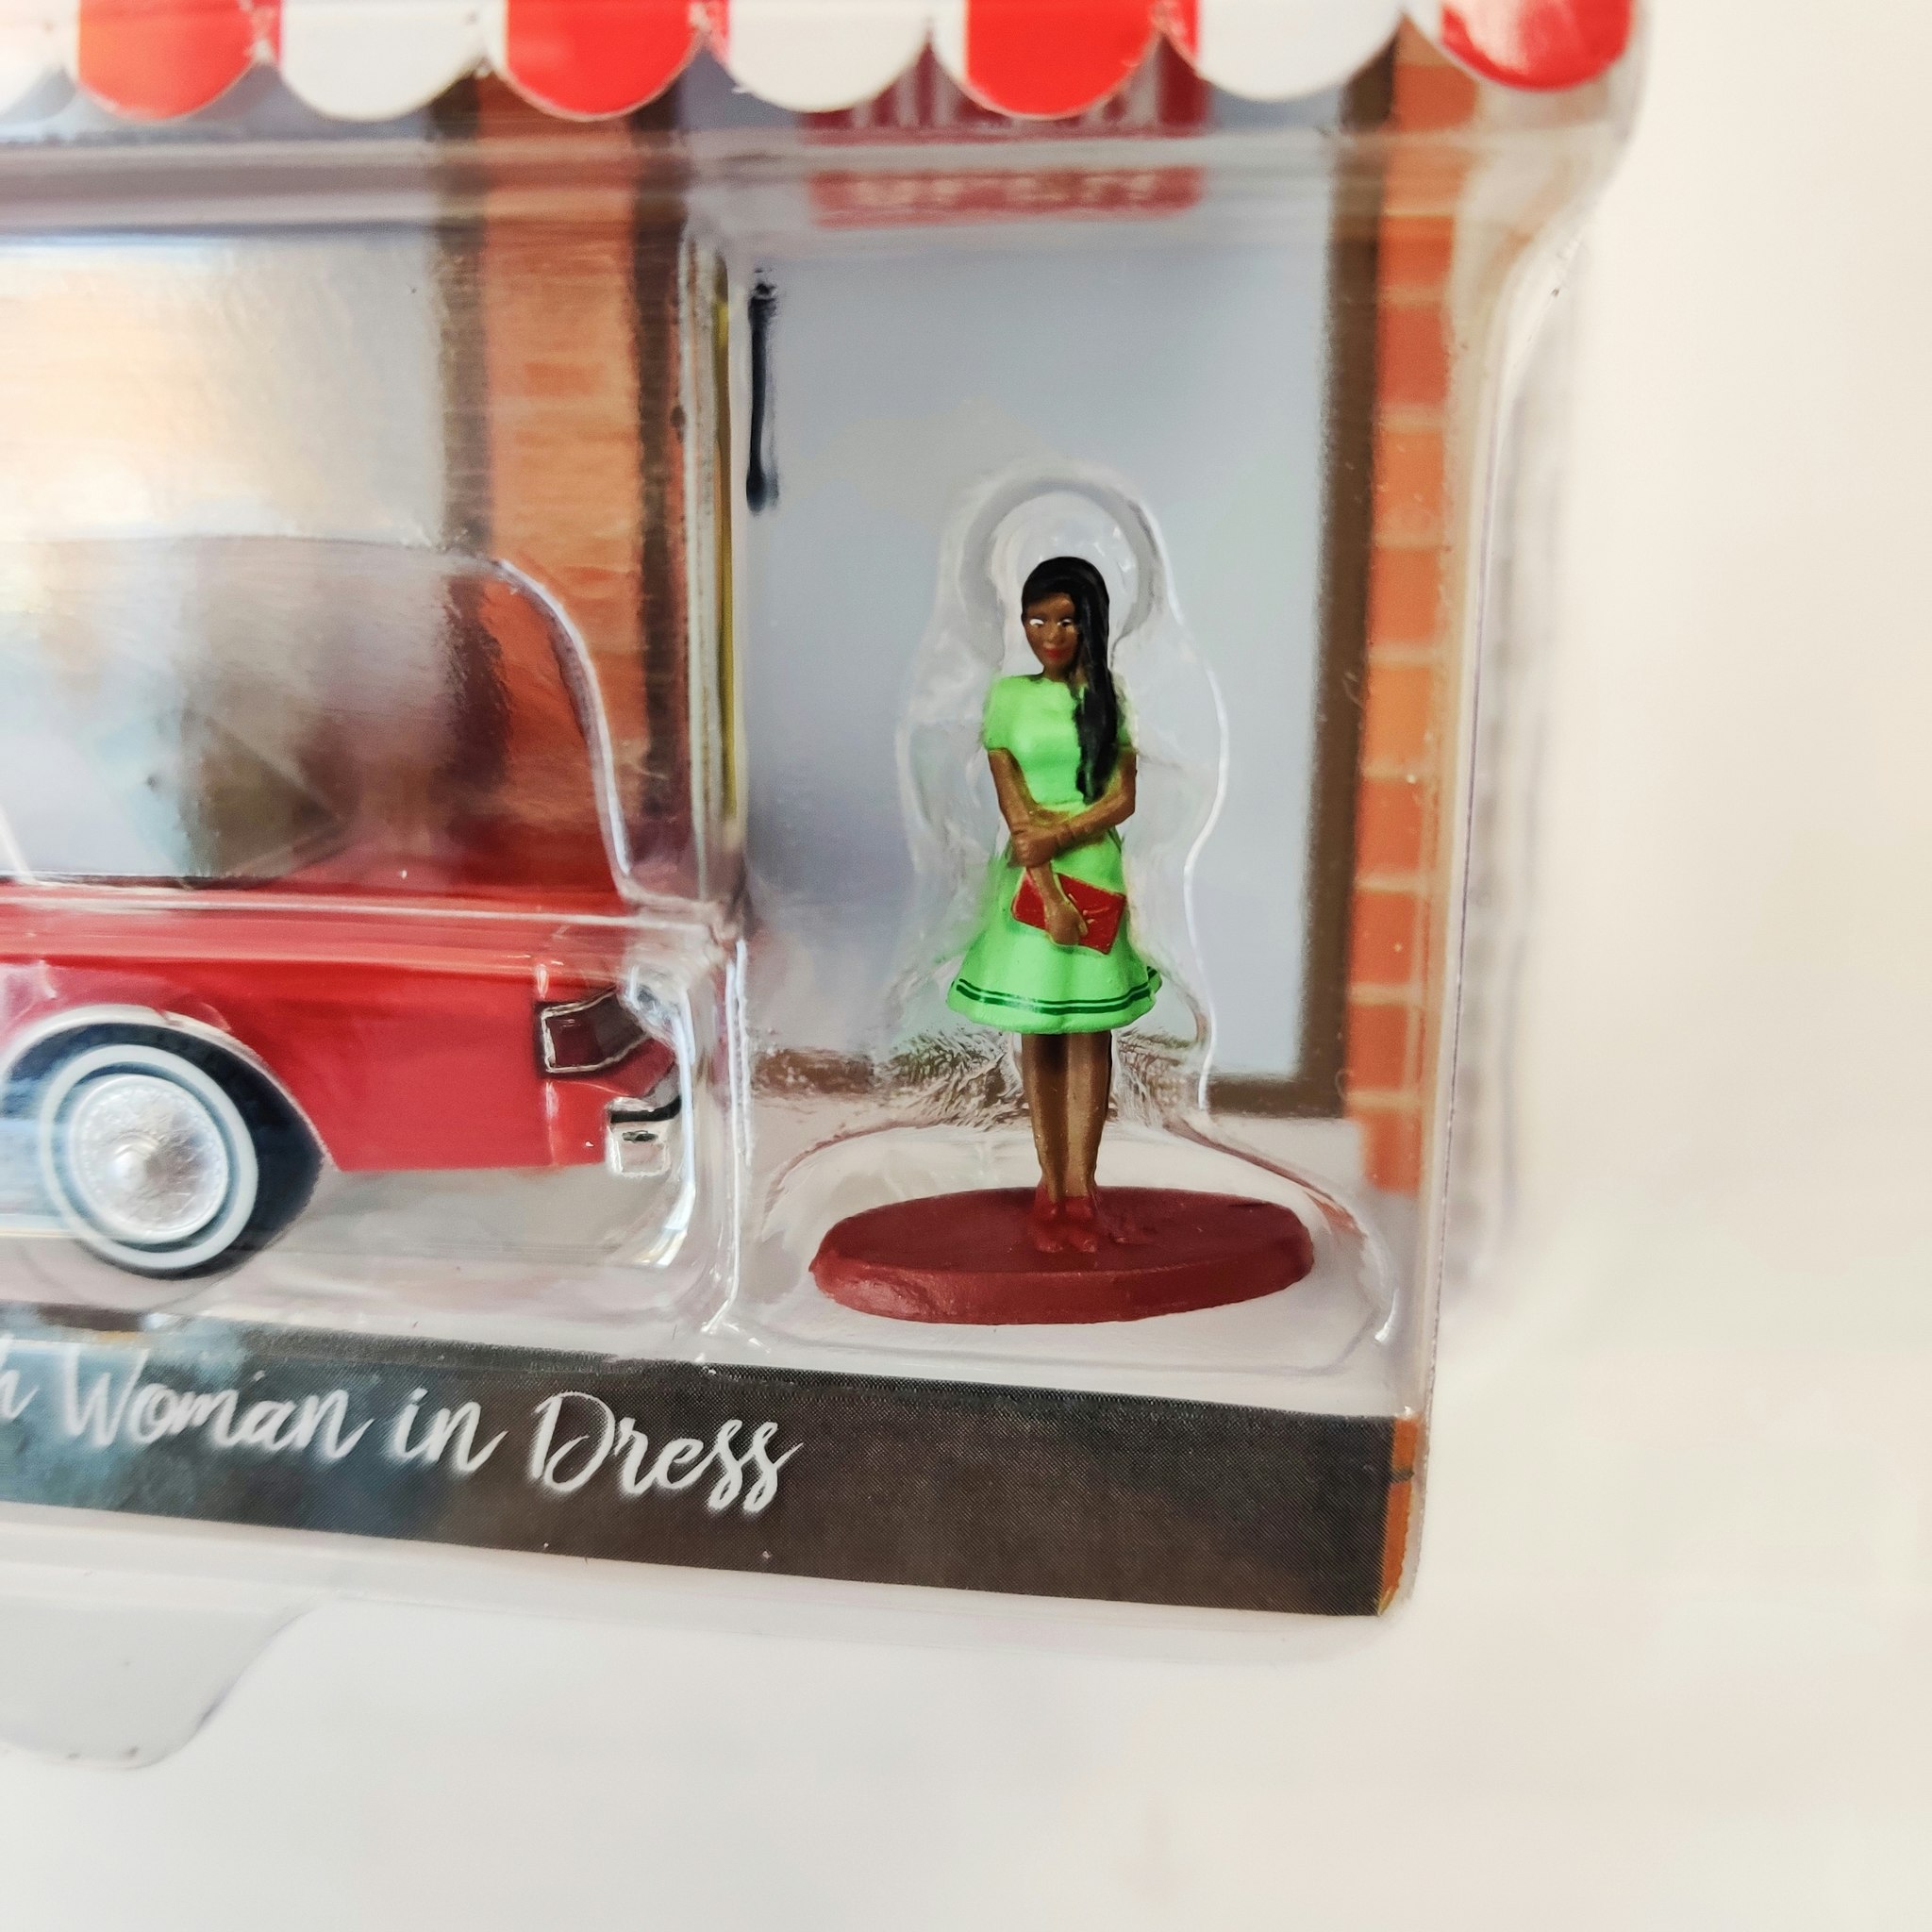 Skala 1/64 Greenlight "The Hobby Shop" 1983 Dodge Diplomat w Woman in dress